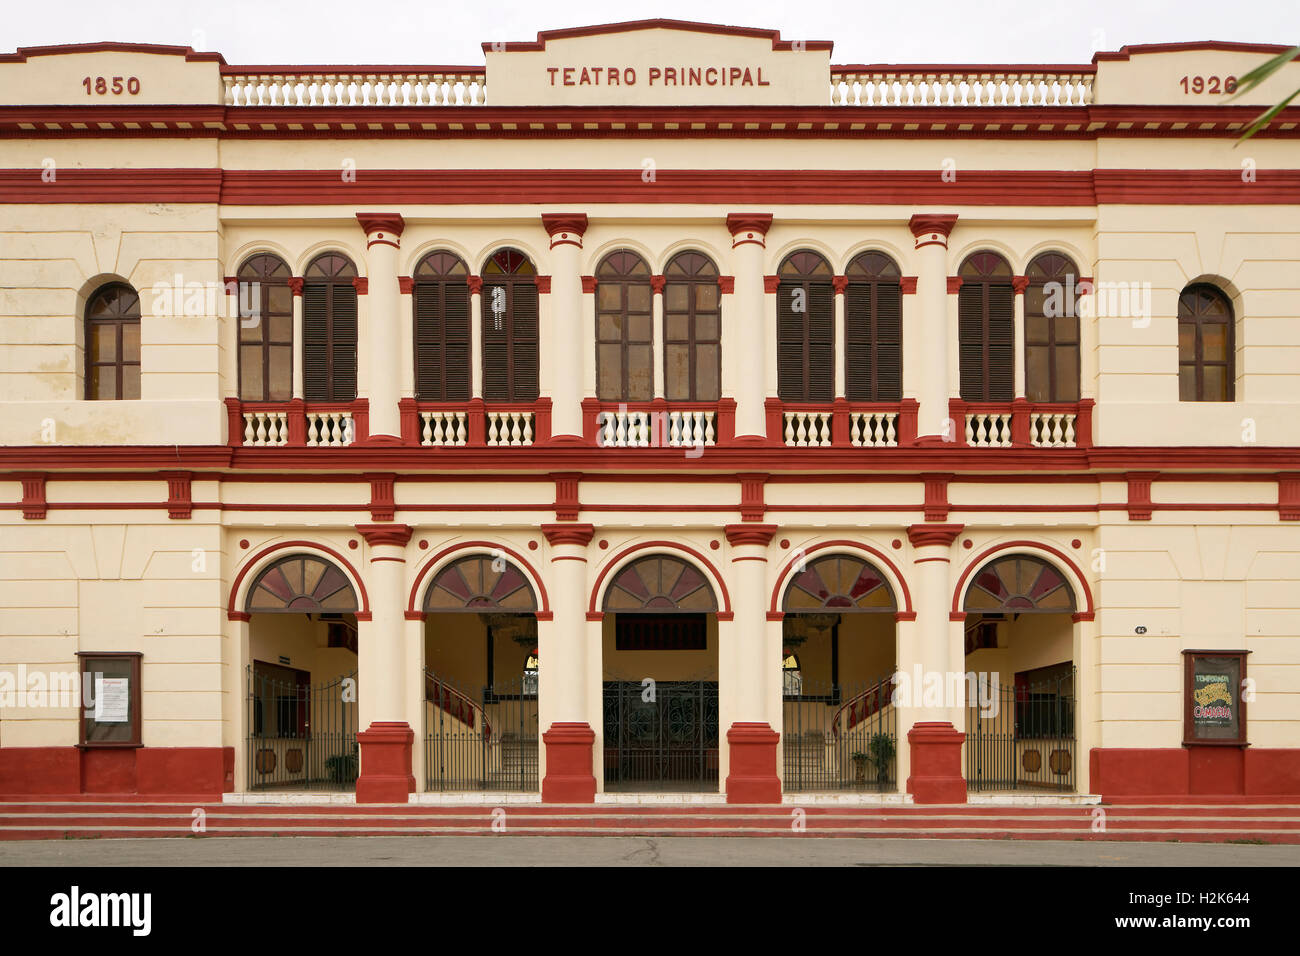 Teatro Principal, fondé en 1850, de style colonial, Camagüey, la province de Camagüey, Cuba Banque D'Images